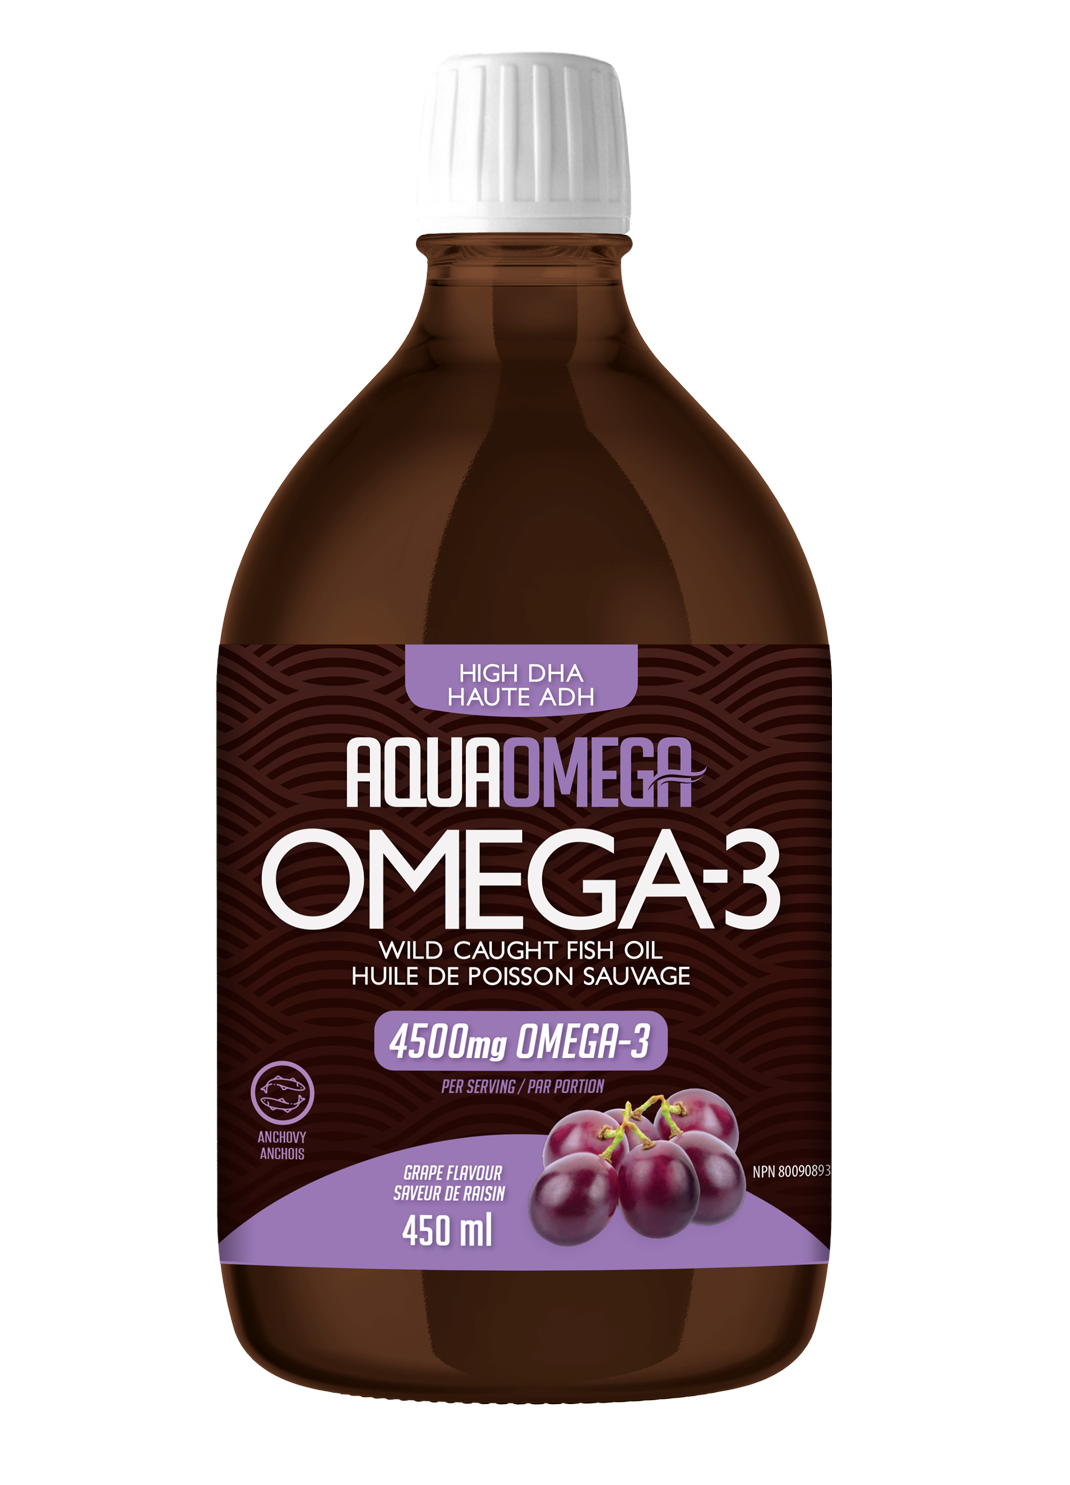 AquaOmega 1:5 High DHA Omega-3 with Caught Fish Oil, Grape flavor (450ml)